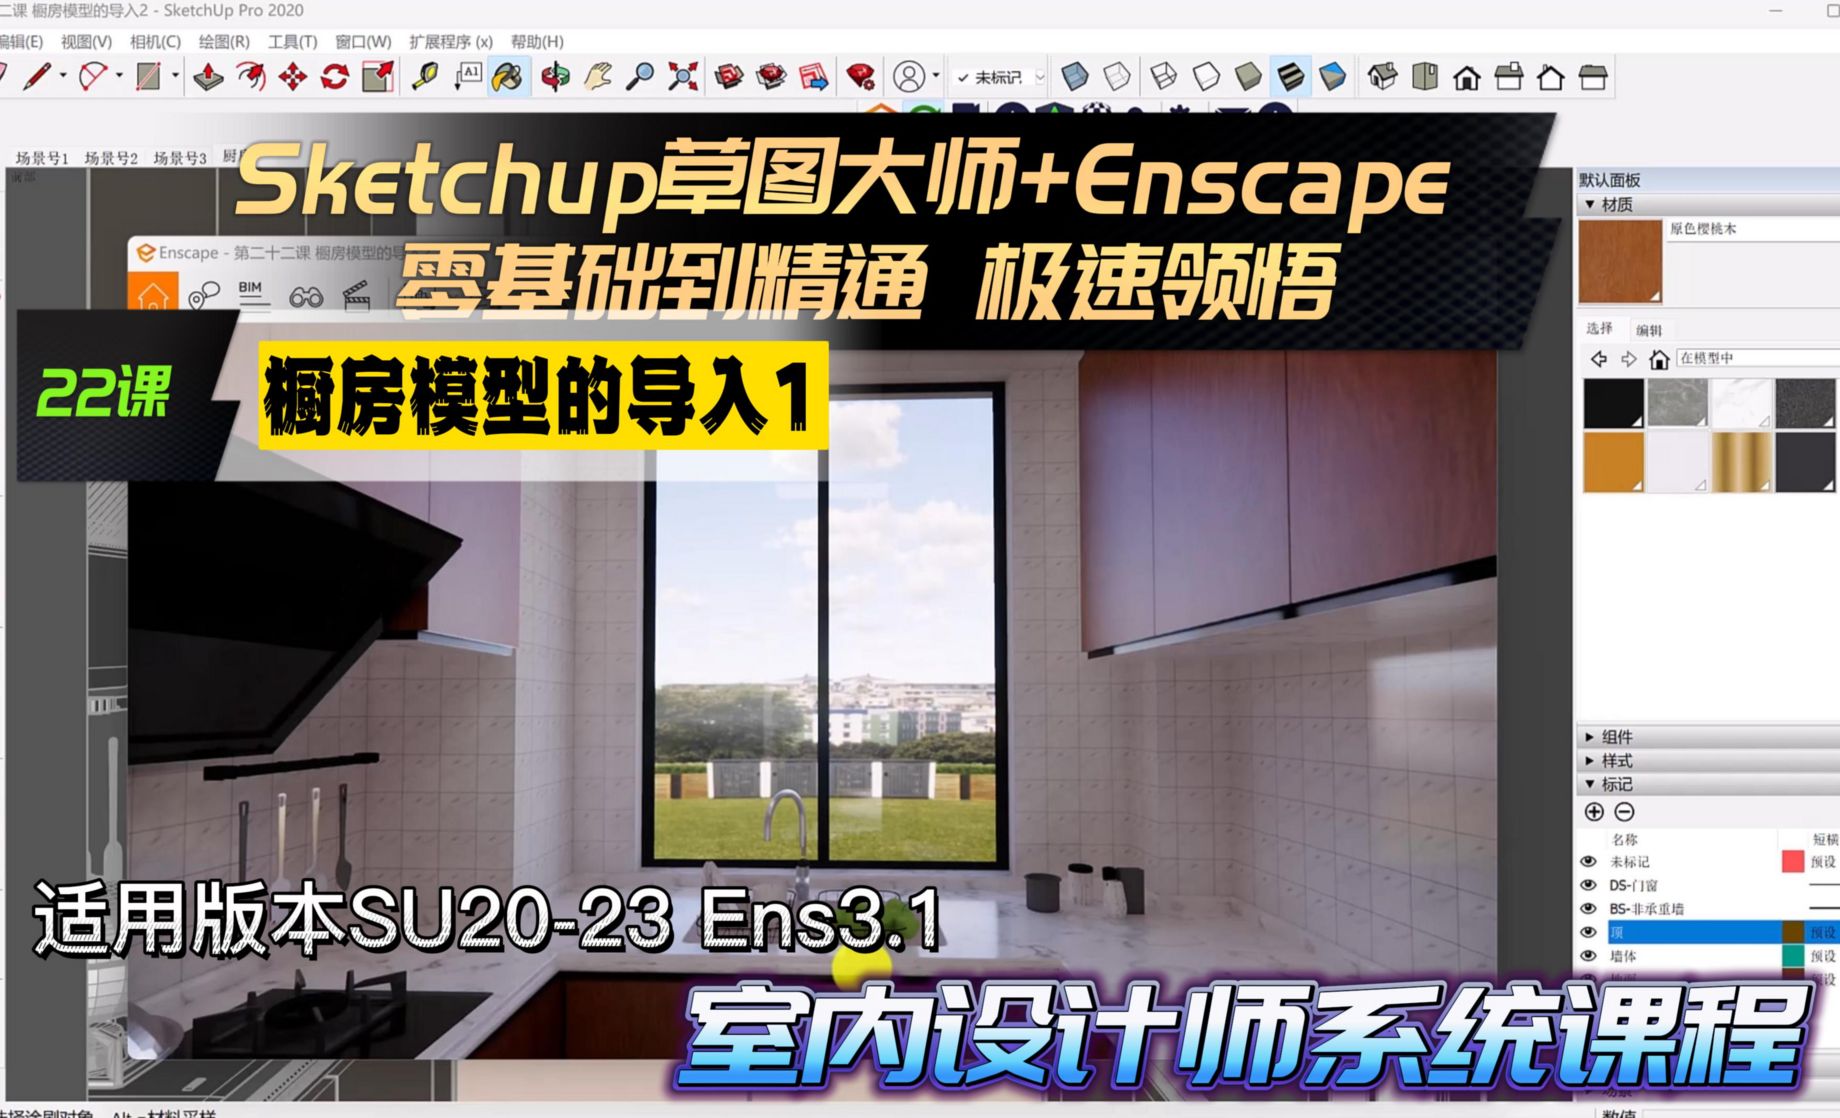 Sketchup+Enscape 室内设计极速领悟-橱房模型的导入1